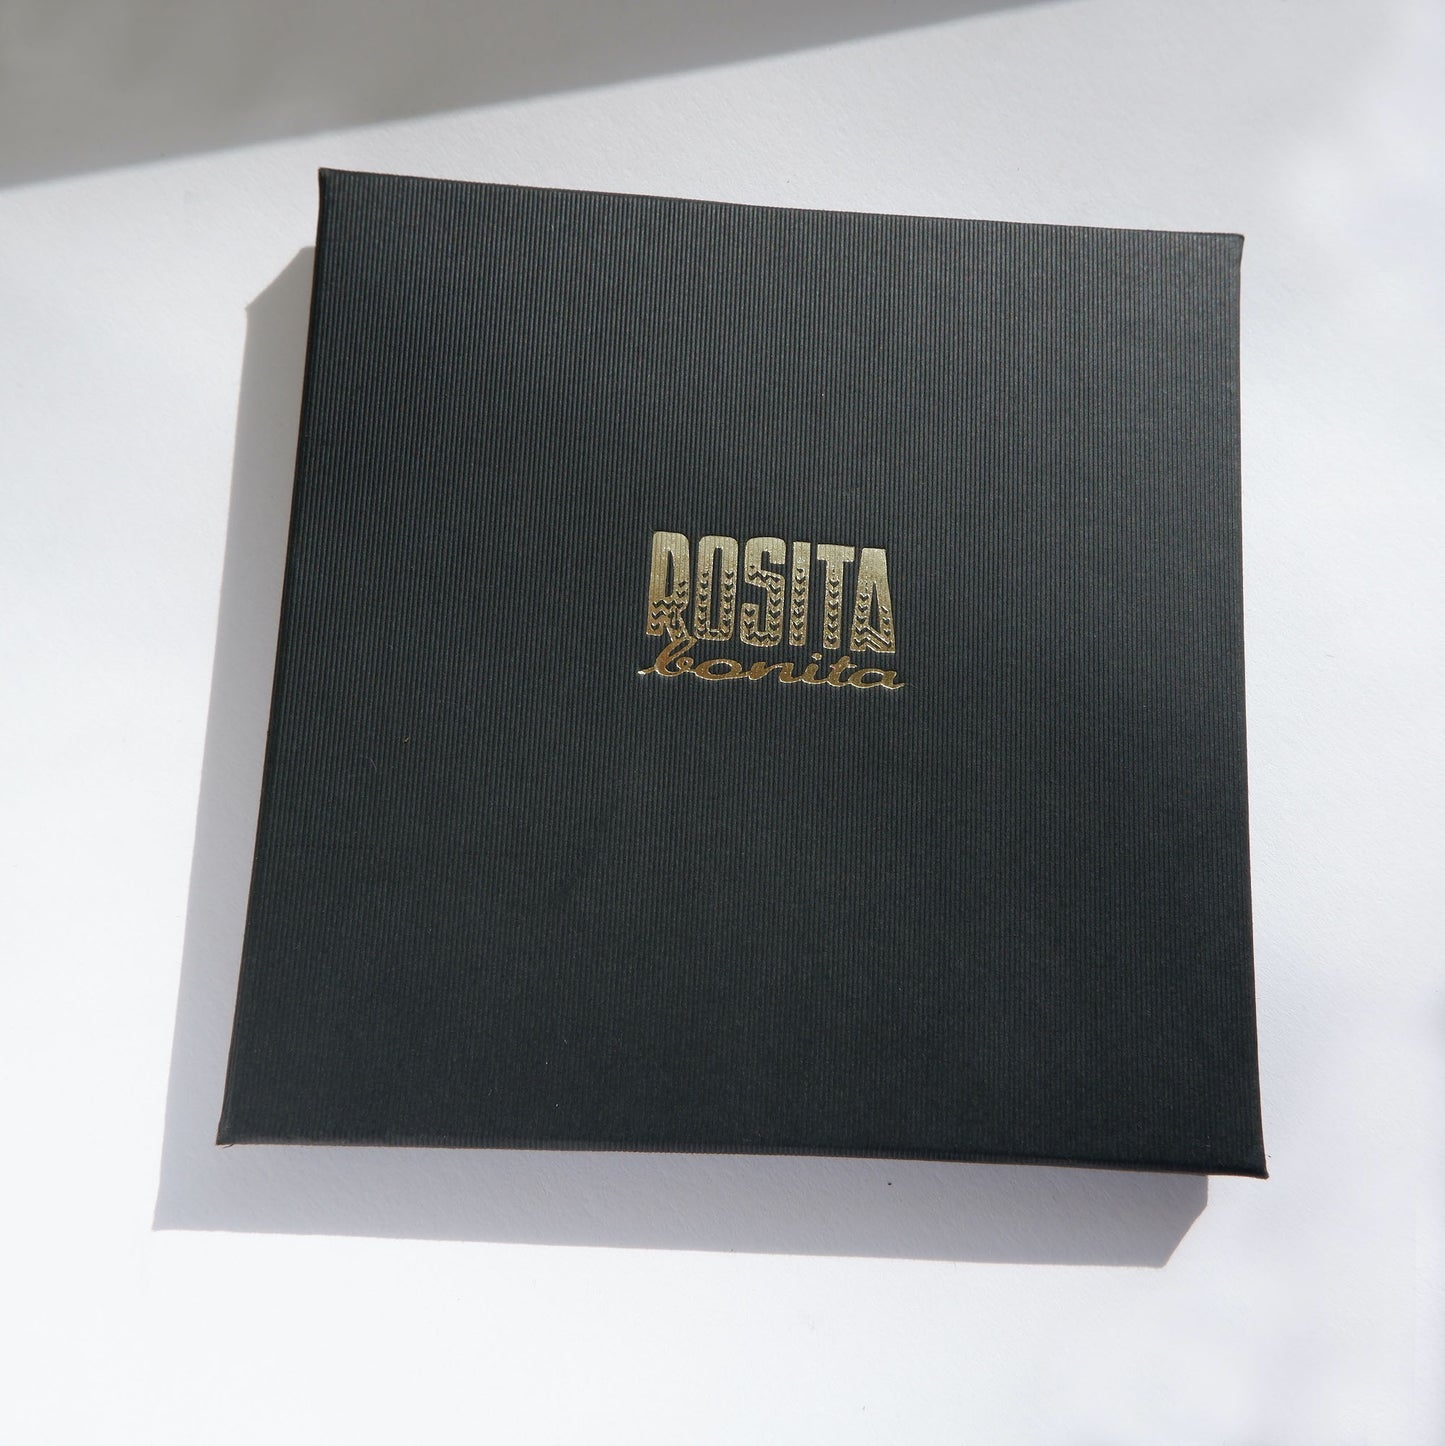 Black pinstripe cardboard jewellery box with Rosita Bonita logo in gold